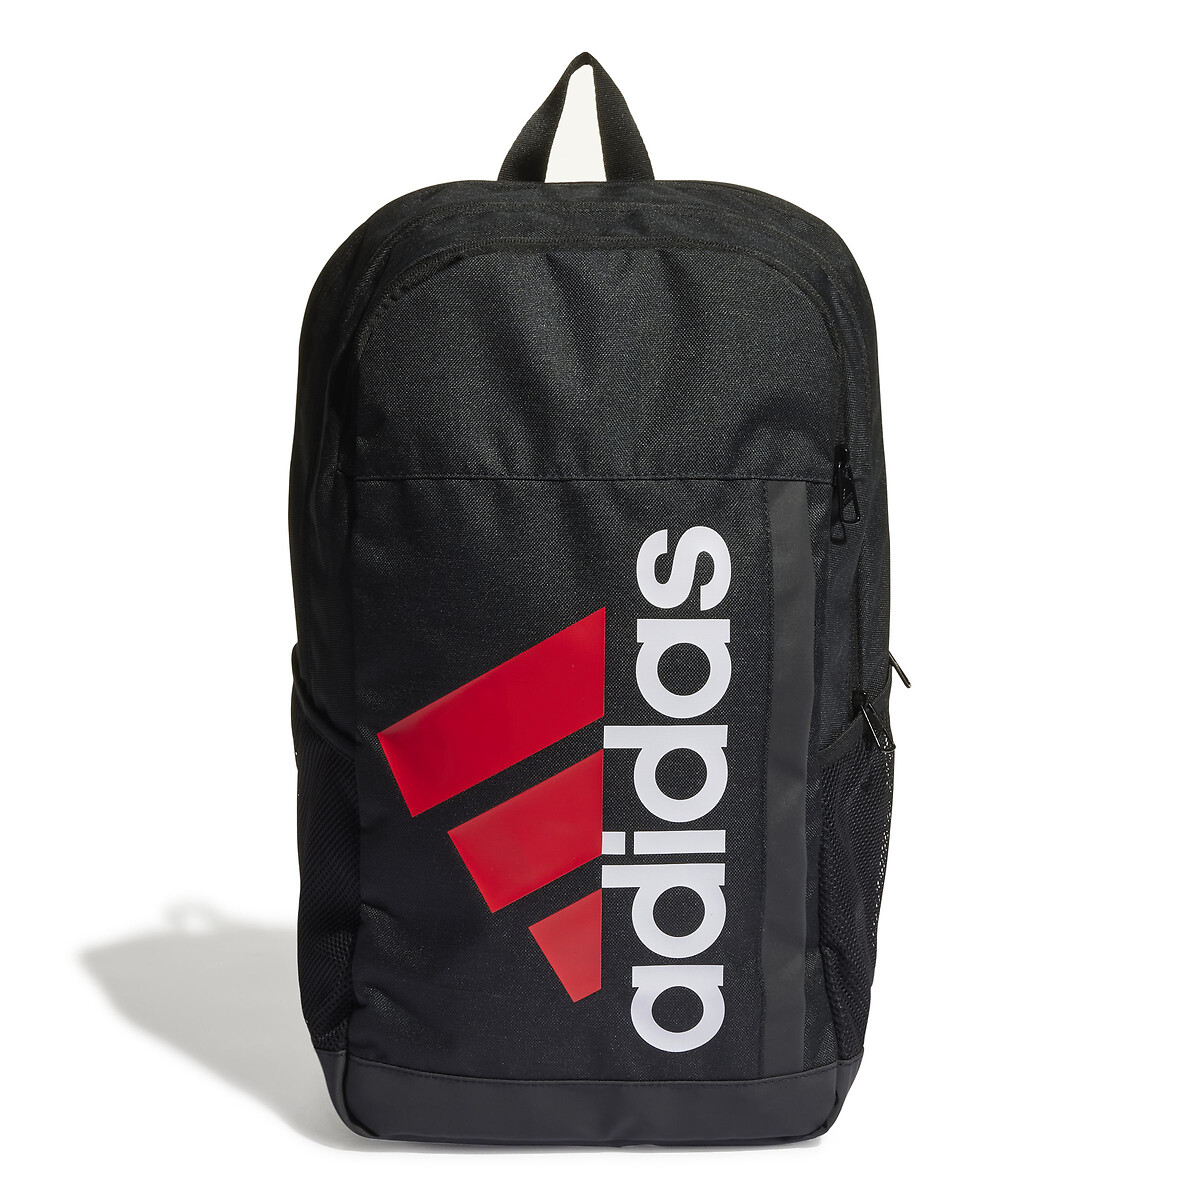 adidas Originals 'always Original' backpack in black | ASOS